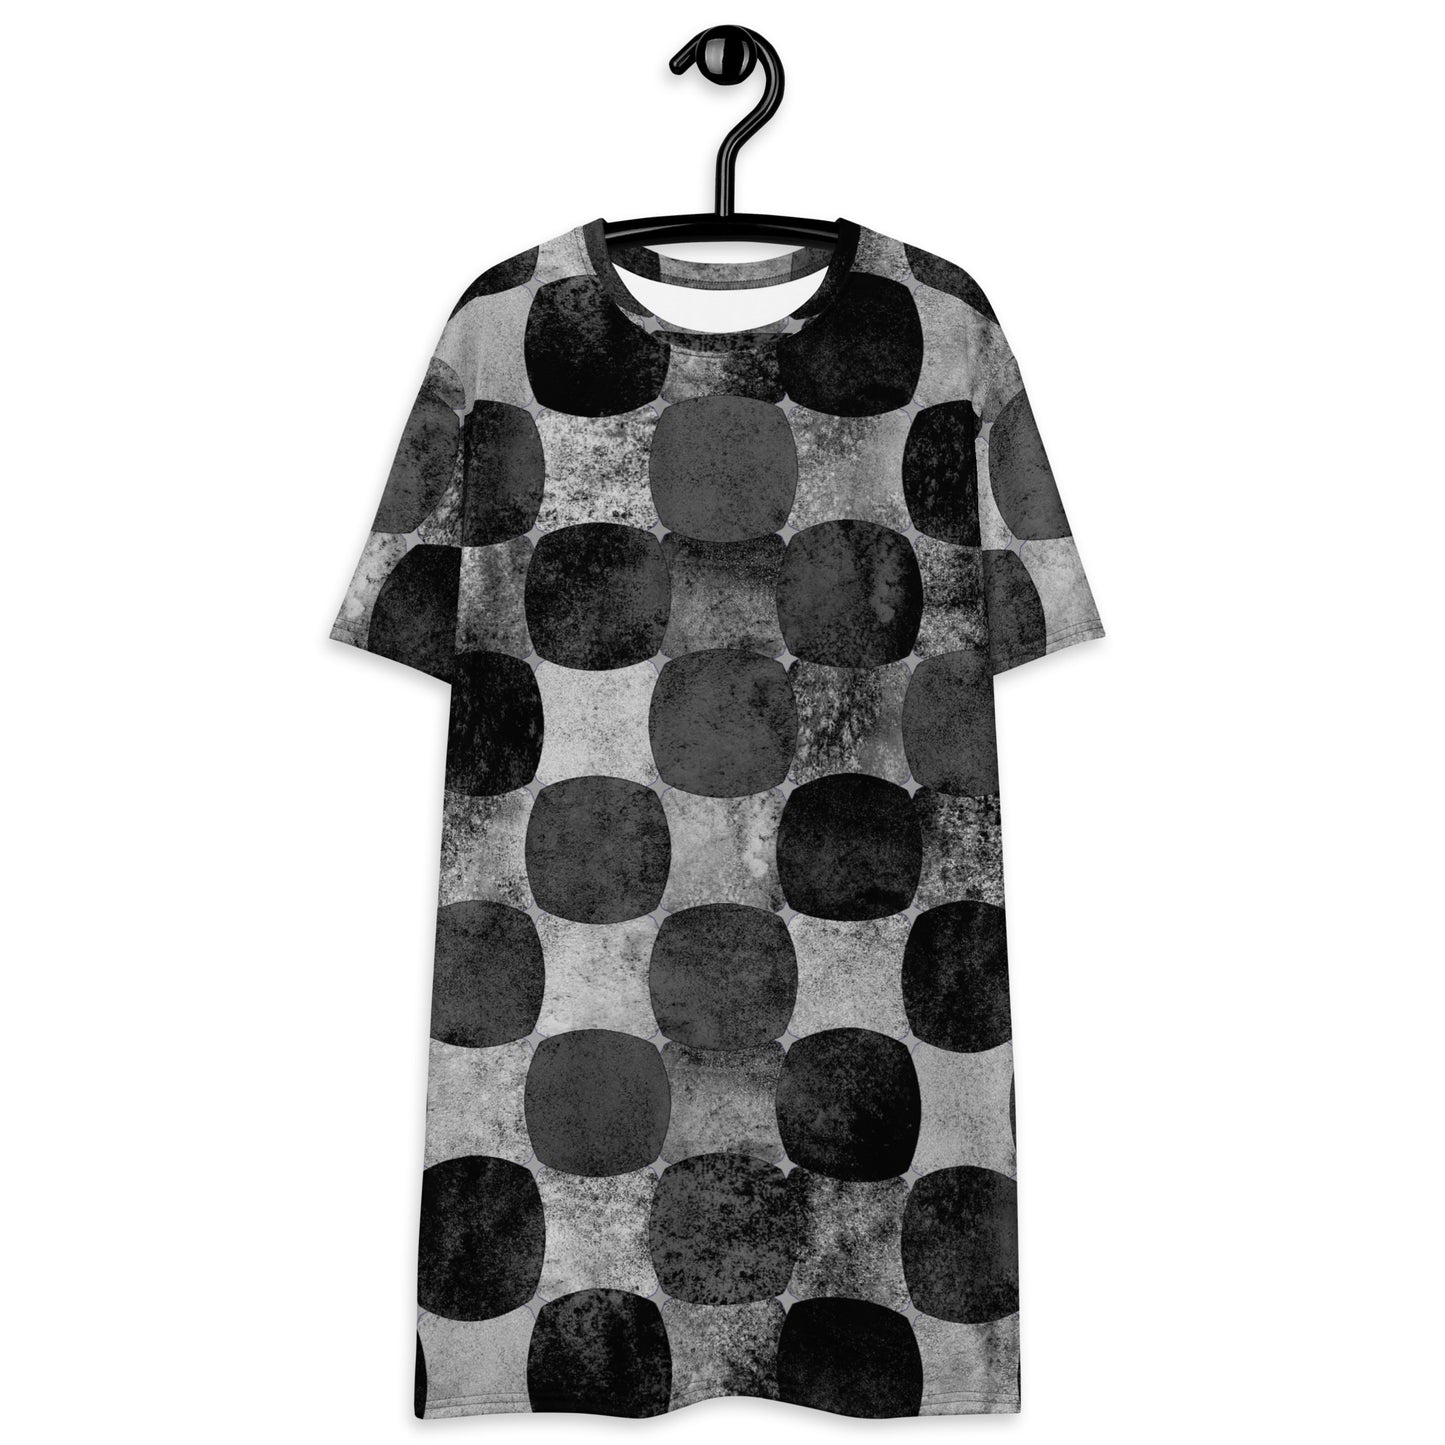 Grunge Water Color Pattern T-shirt Dress